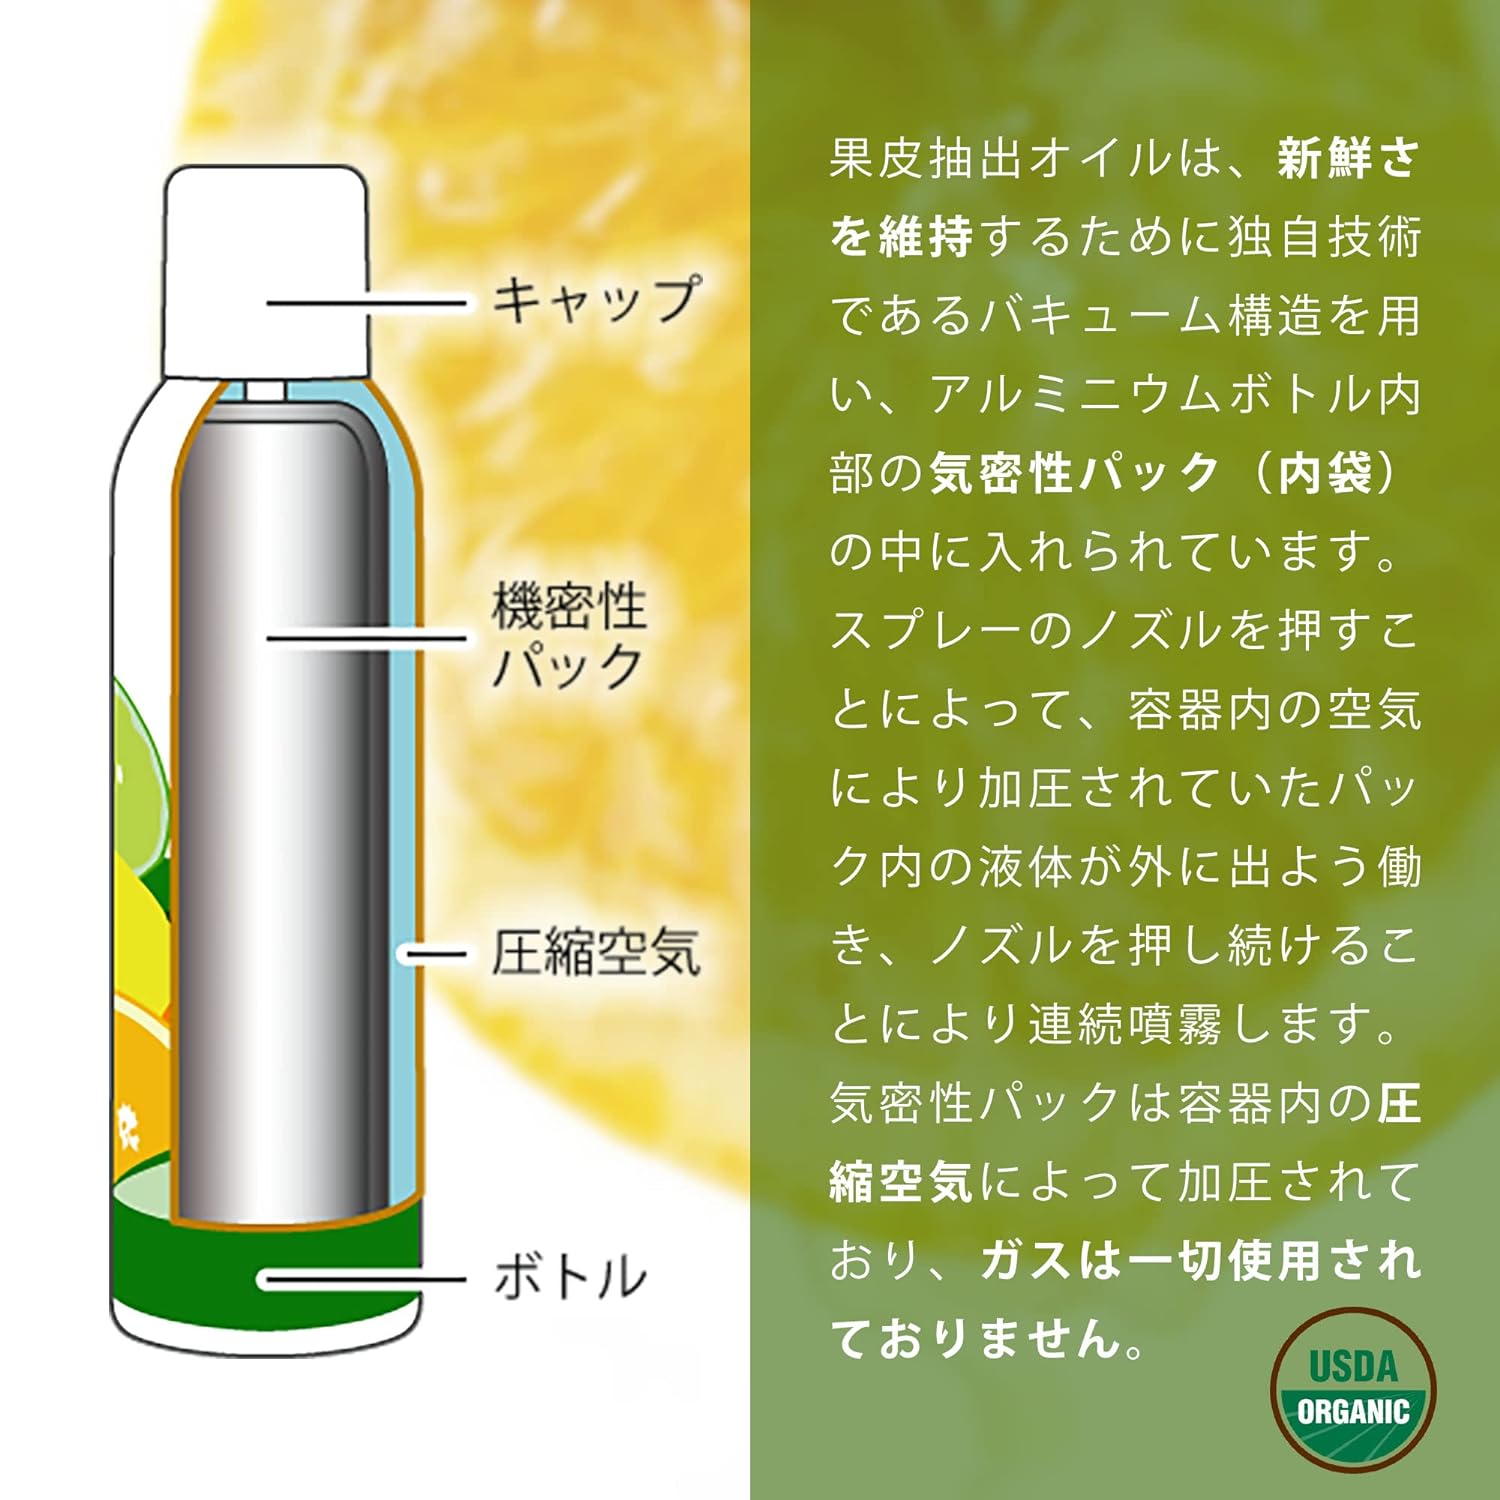 Citrus Magic Air Freshener Lavender Eucalyptus Organic, 3.5 oz : Health & Household